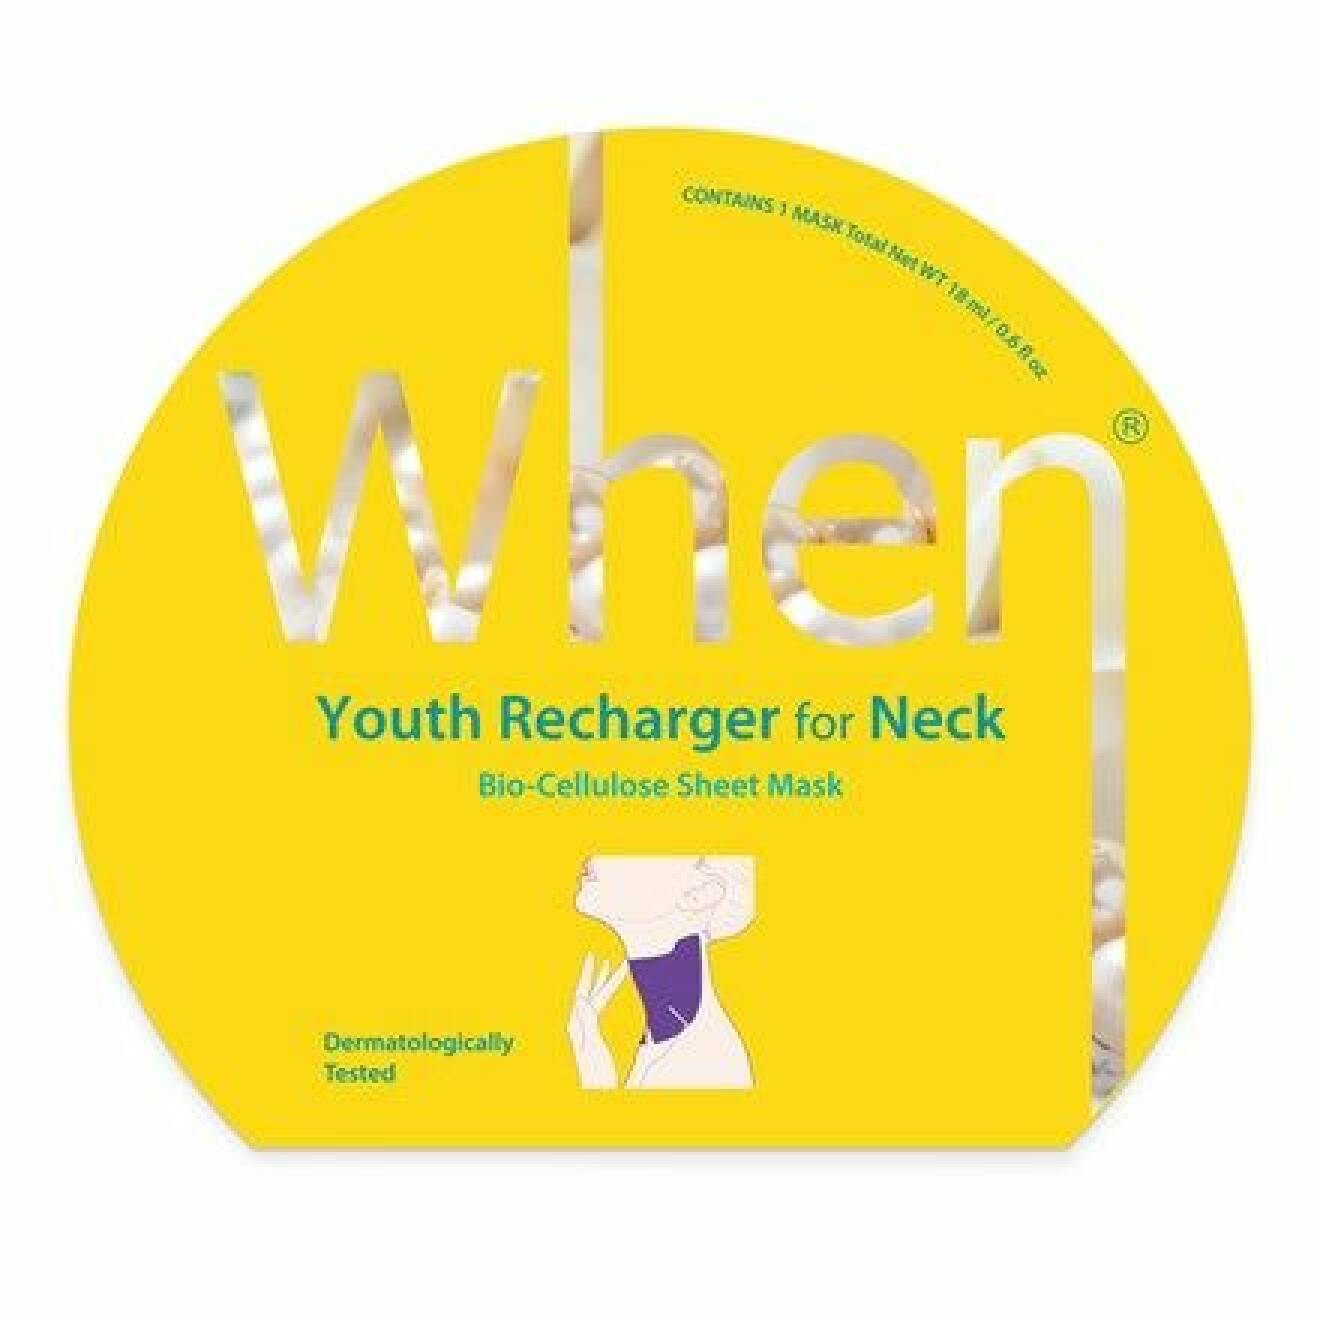 Youth recharger for neck bio cellulose sheet mask från märket When.